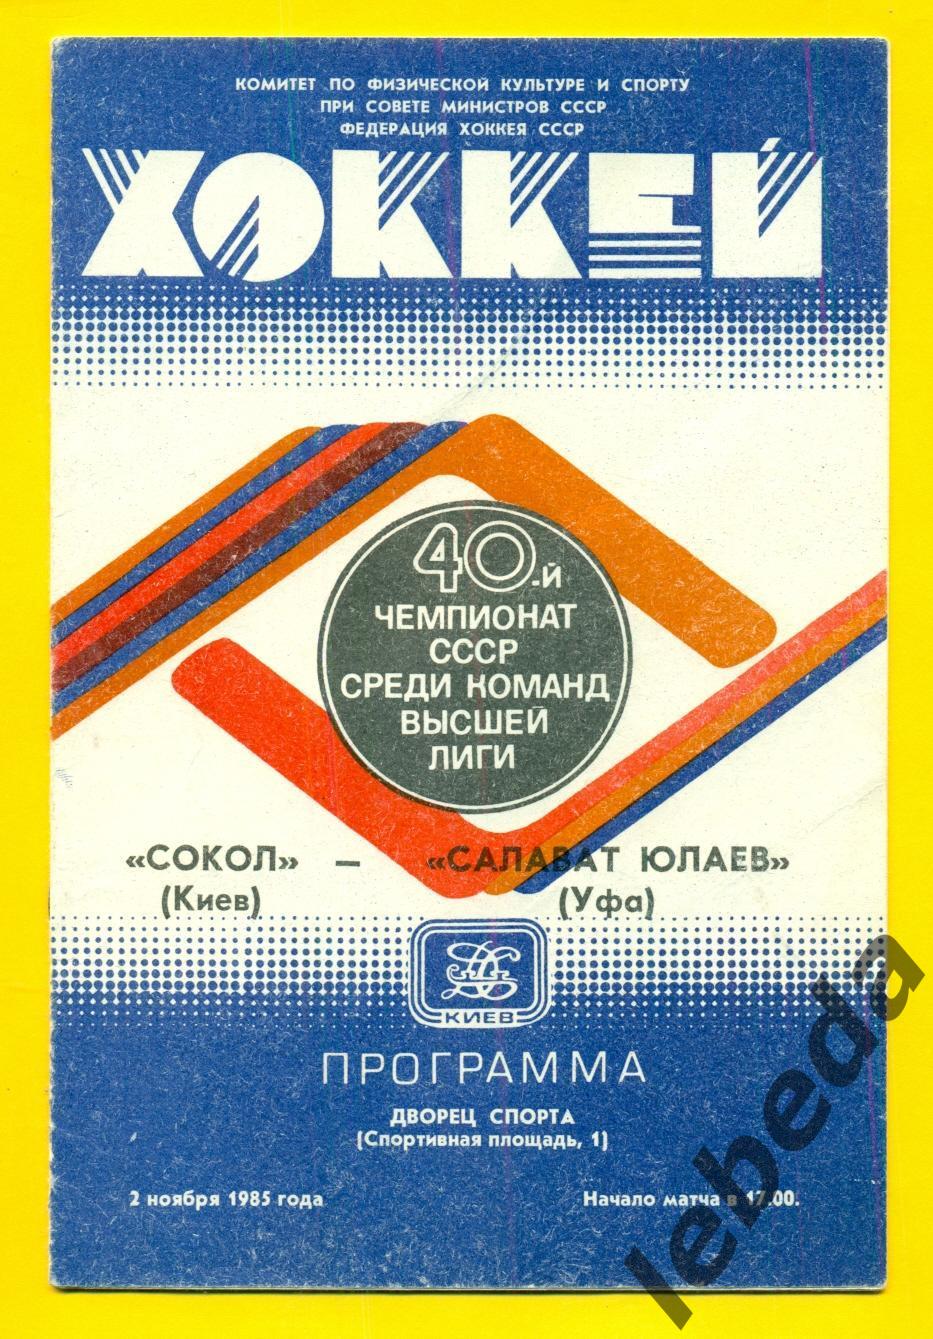 Сокол Киев - Салават Юлаев Уфа - 1985 / 1986 г. (02.11.85.)